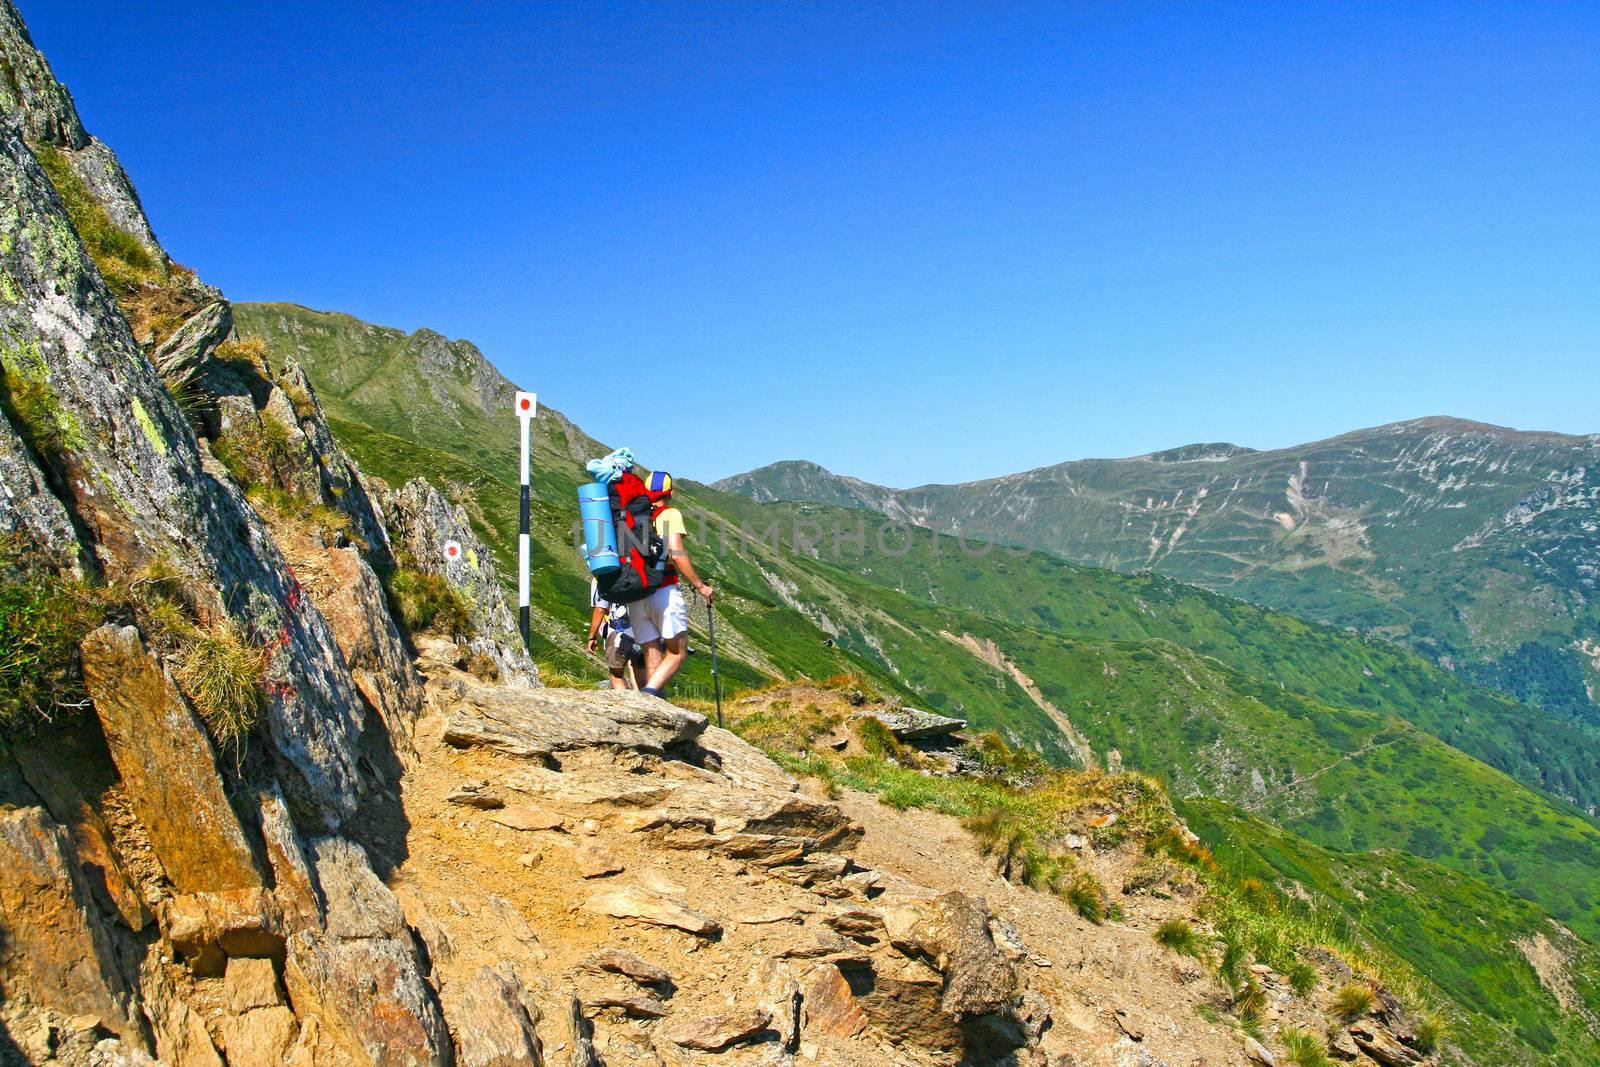 Summer landscape, hiking teens on mountain trail in Fagaras mountains.